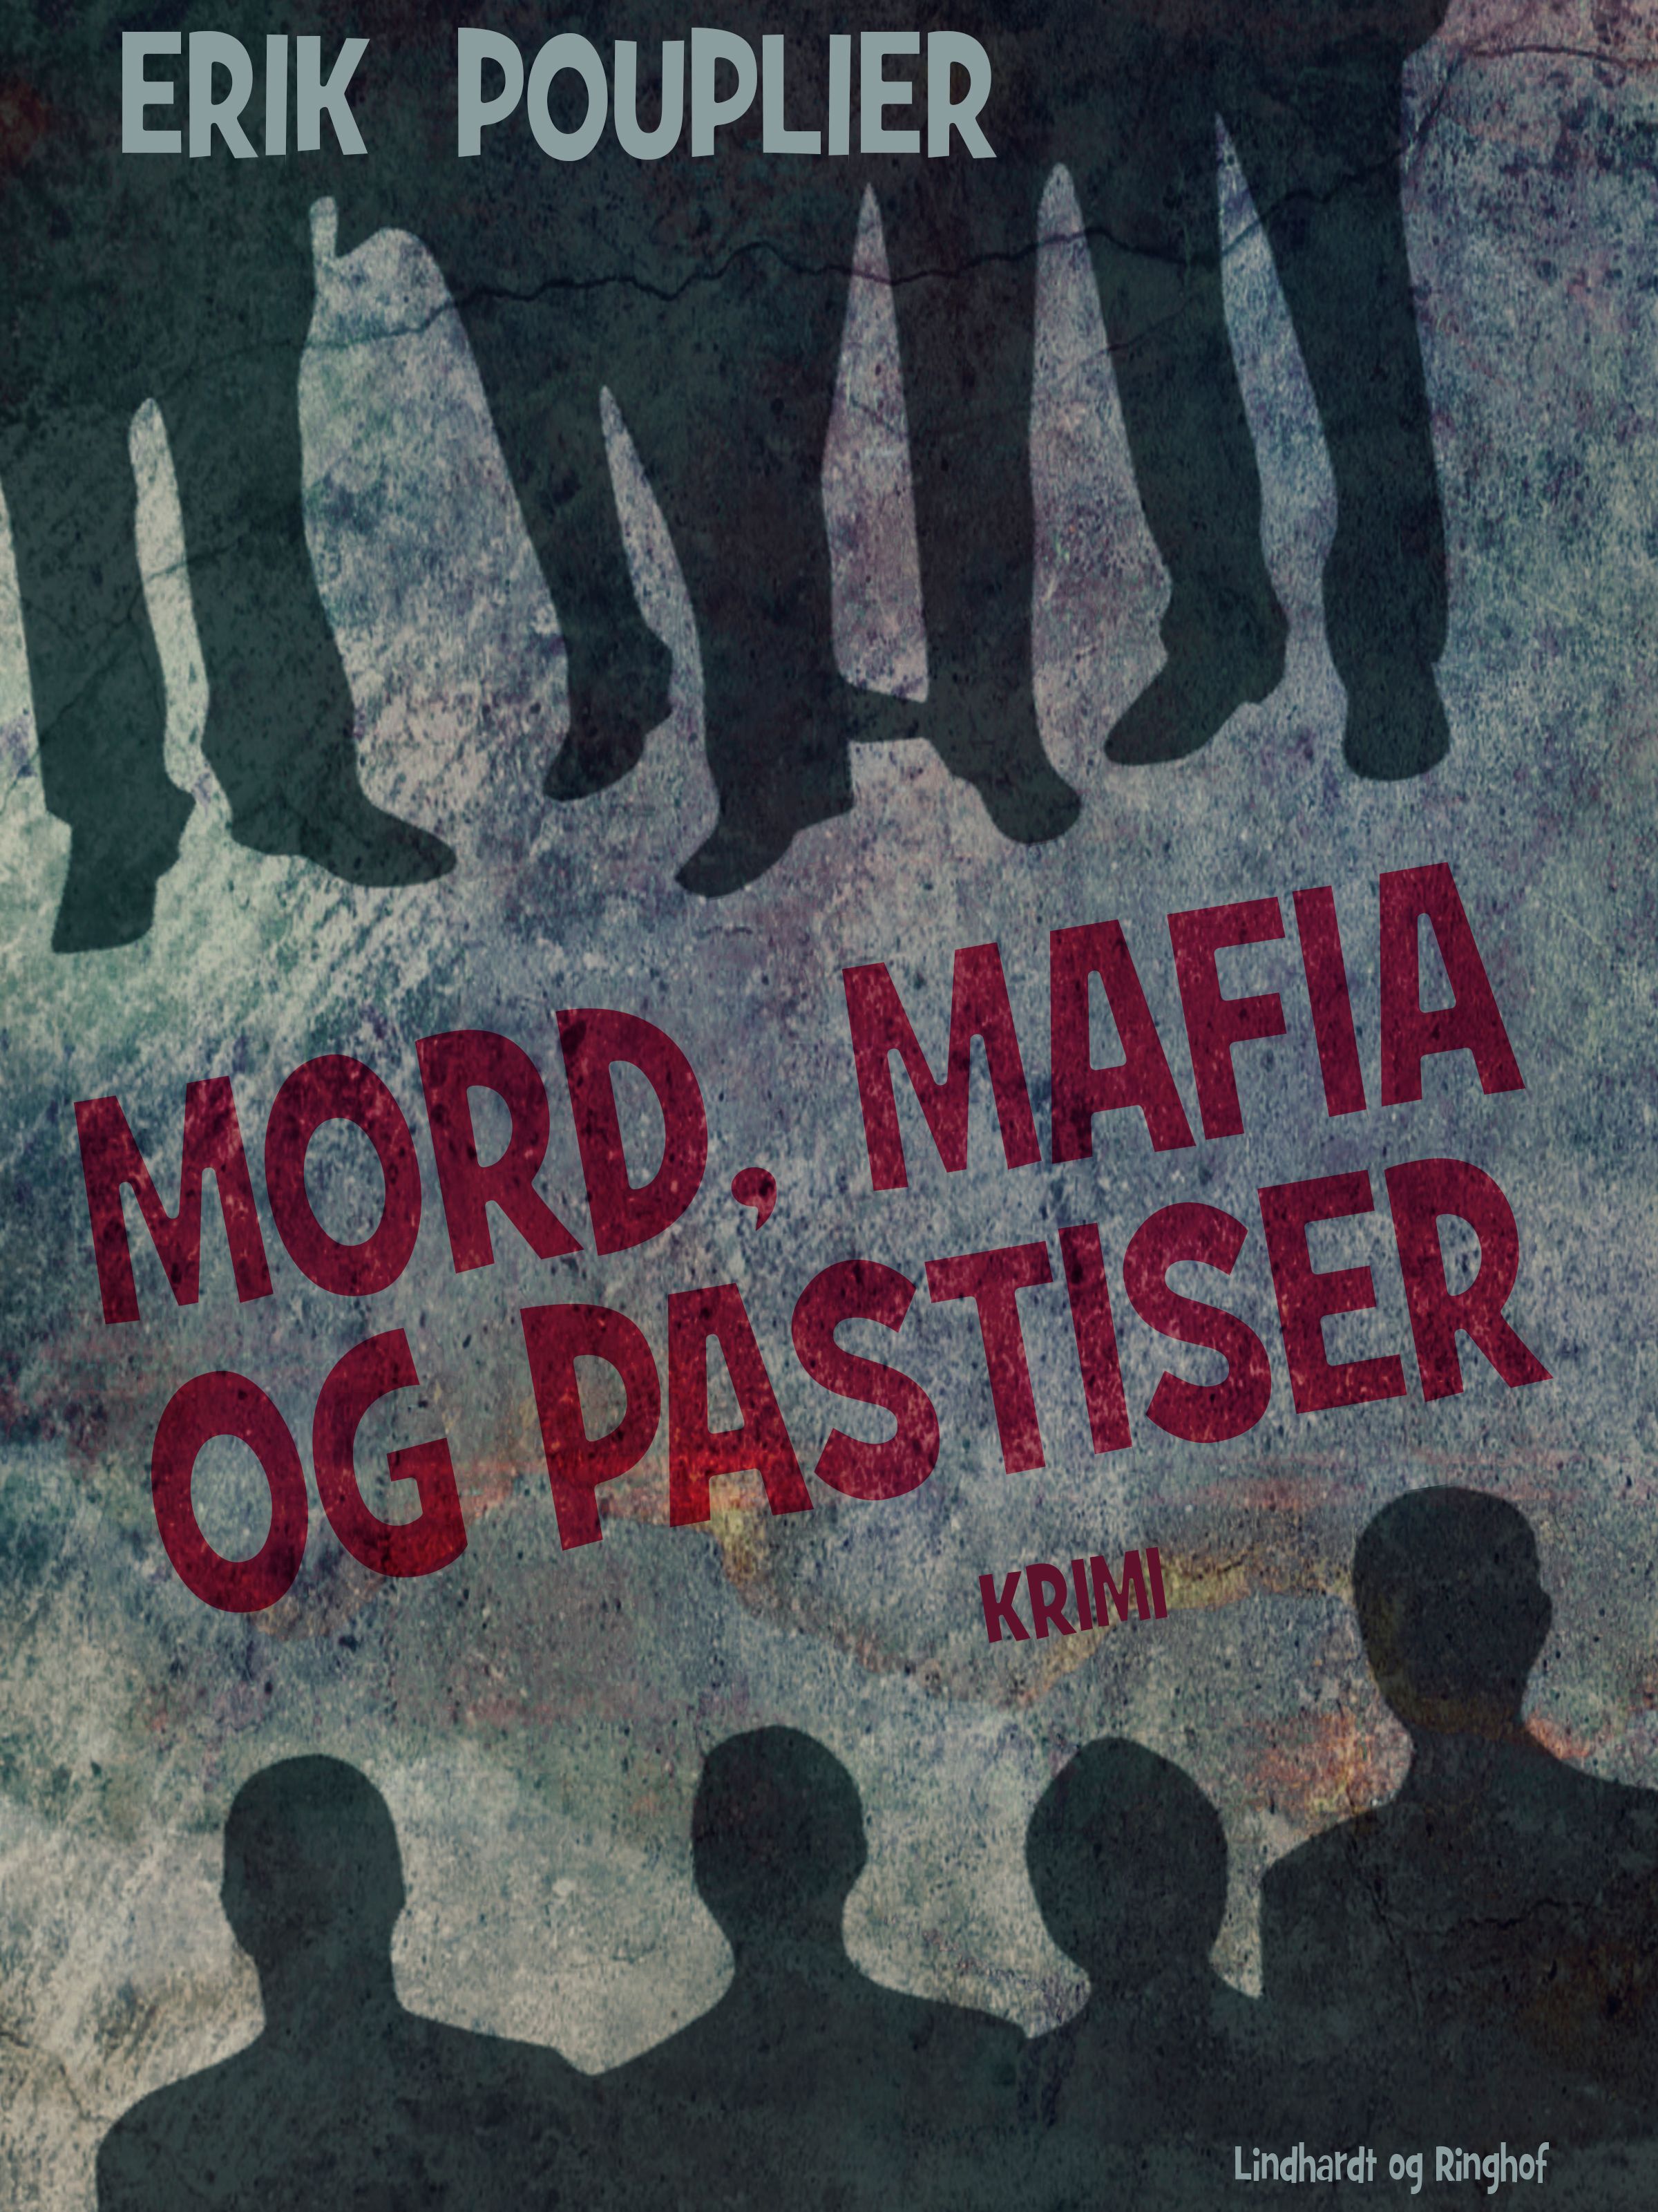 Mord, mafia og pastiser, eBook by Erik Pouplier